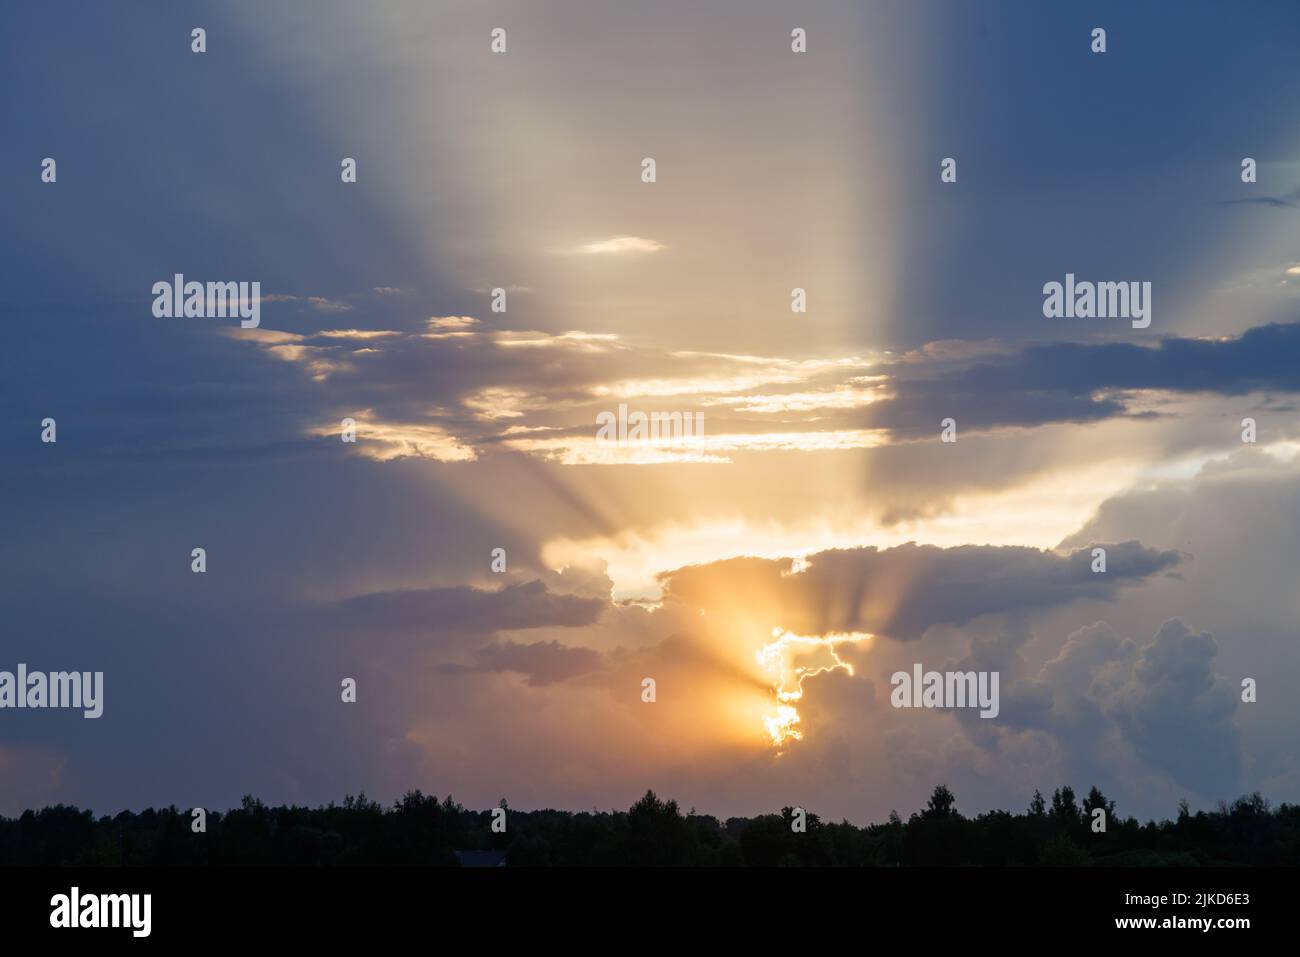 cloudy sunset sky with yellow sun rays with horizon Stock Photo